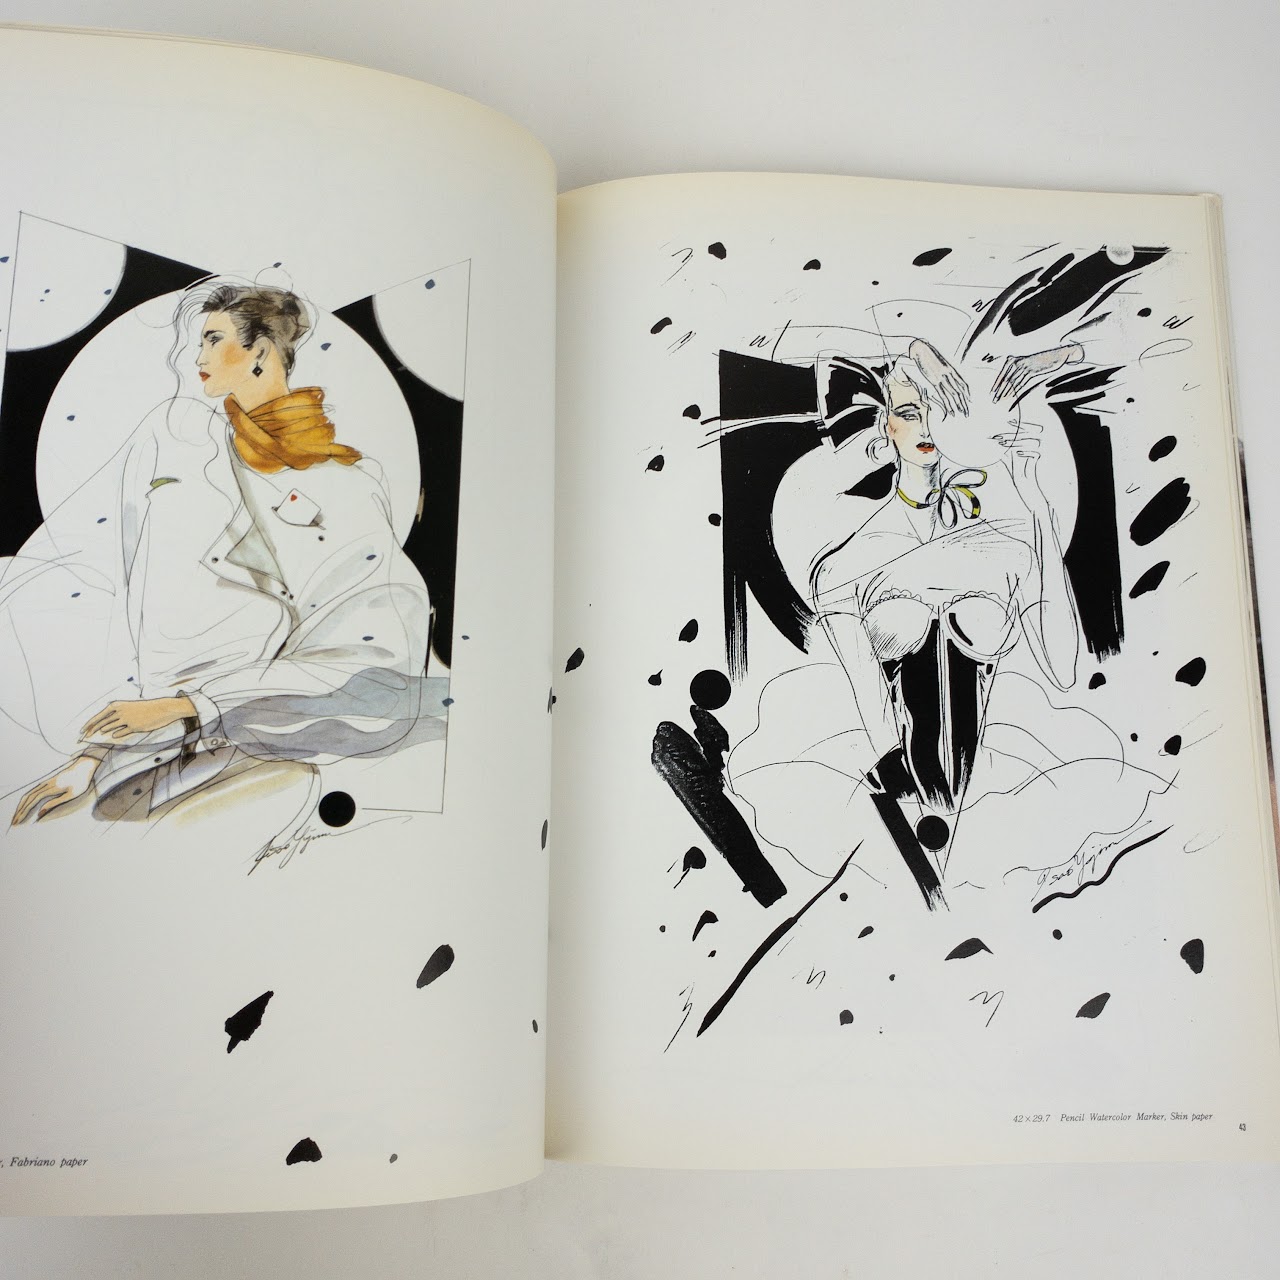 Isao Yajima 1980s "Figure Drawing for Fashion" Book